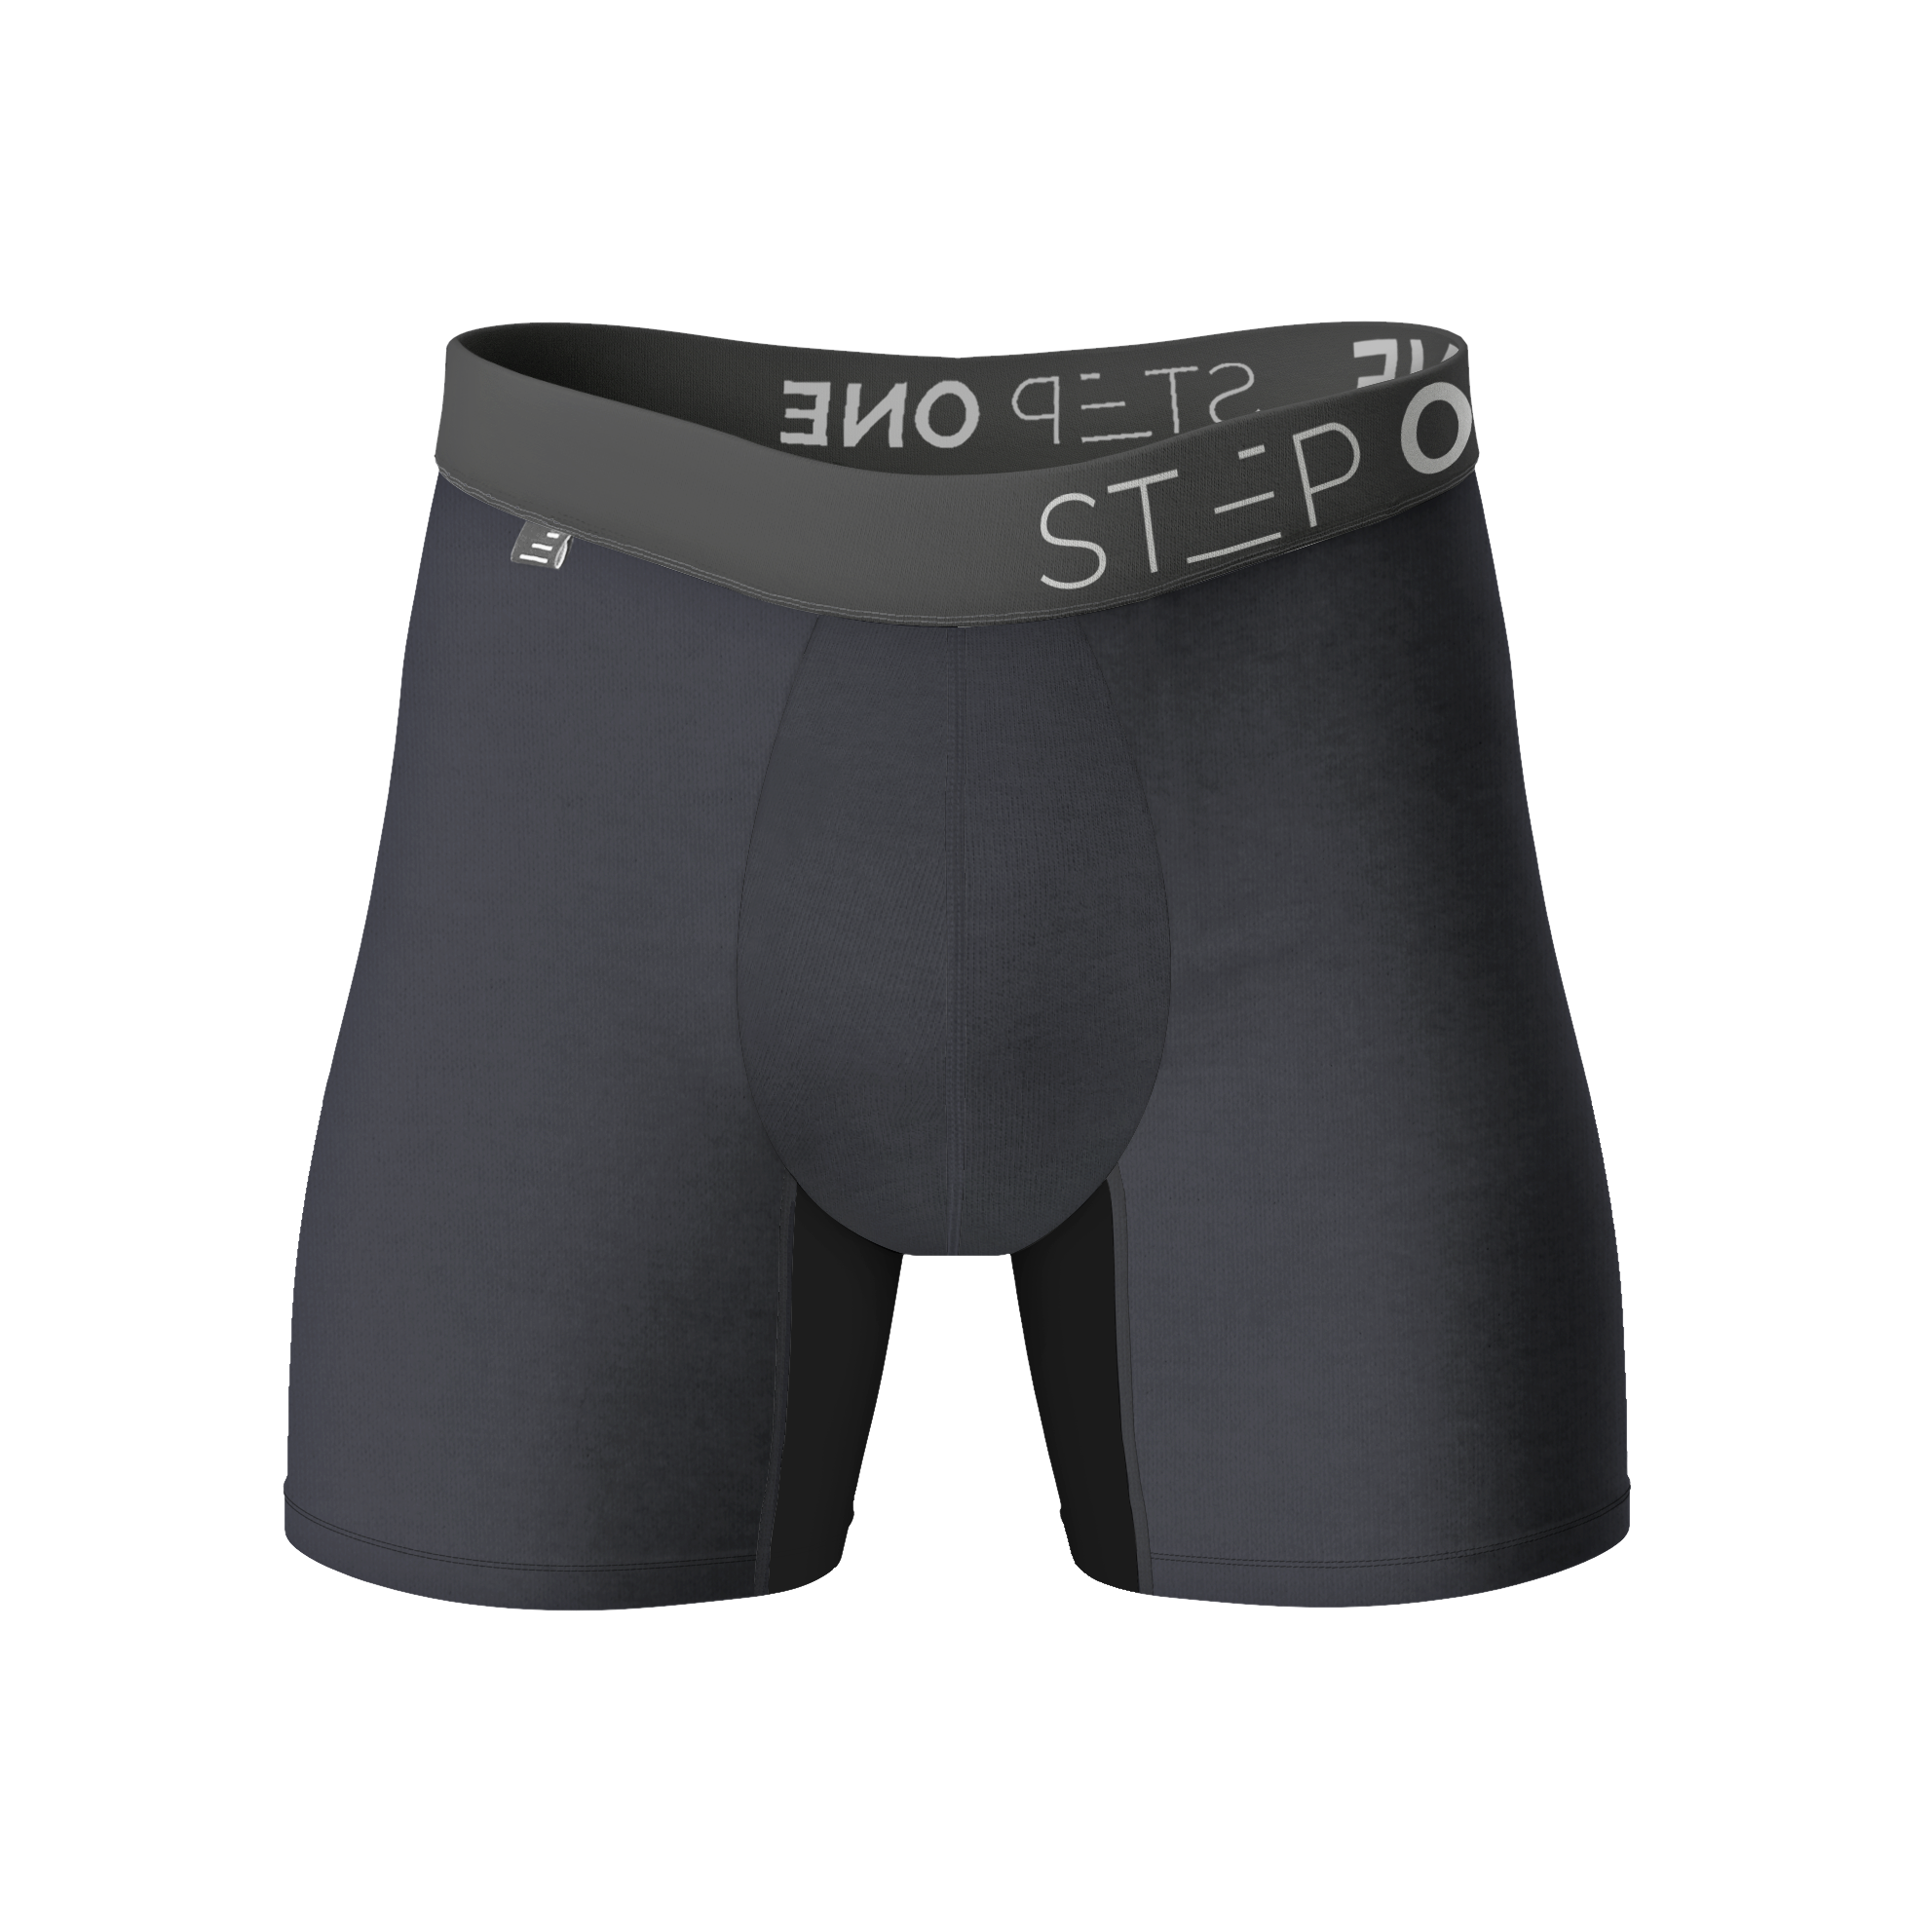 Boxer Brief - Ahoy Sailor  Step One Men's Underwear US